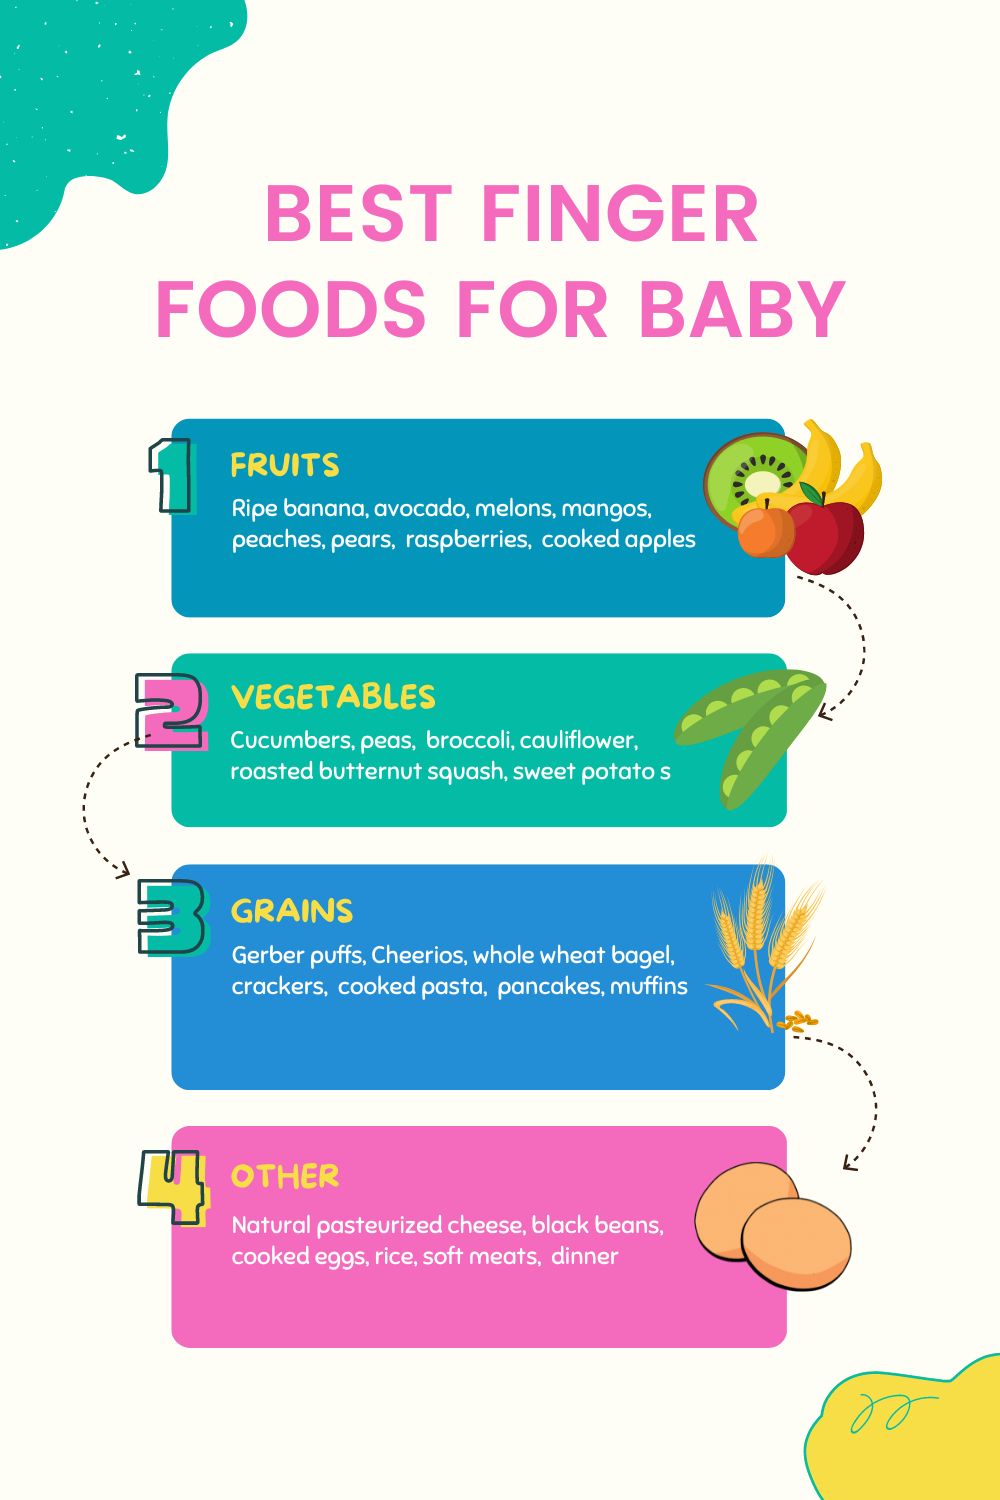 List of best finger foods for baby